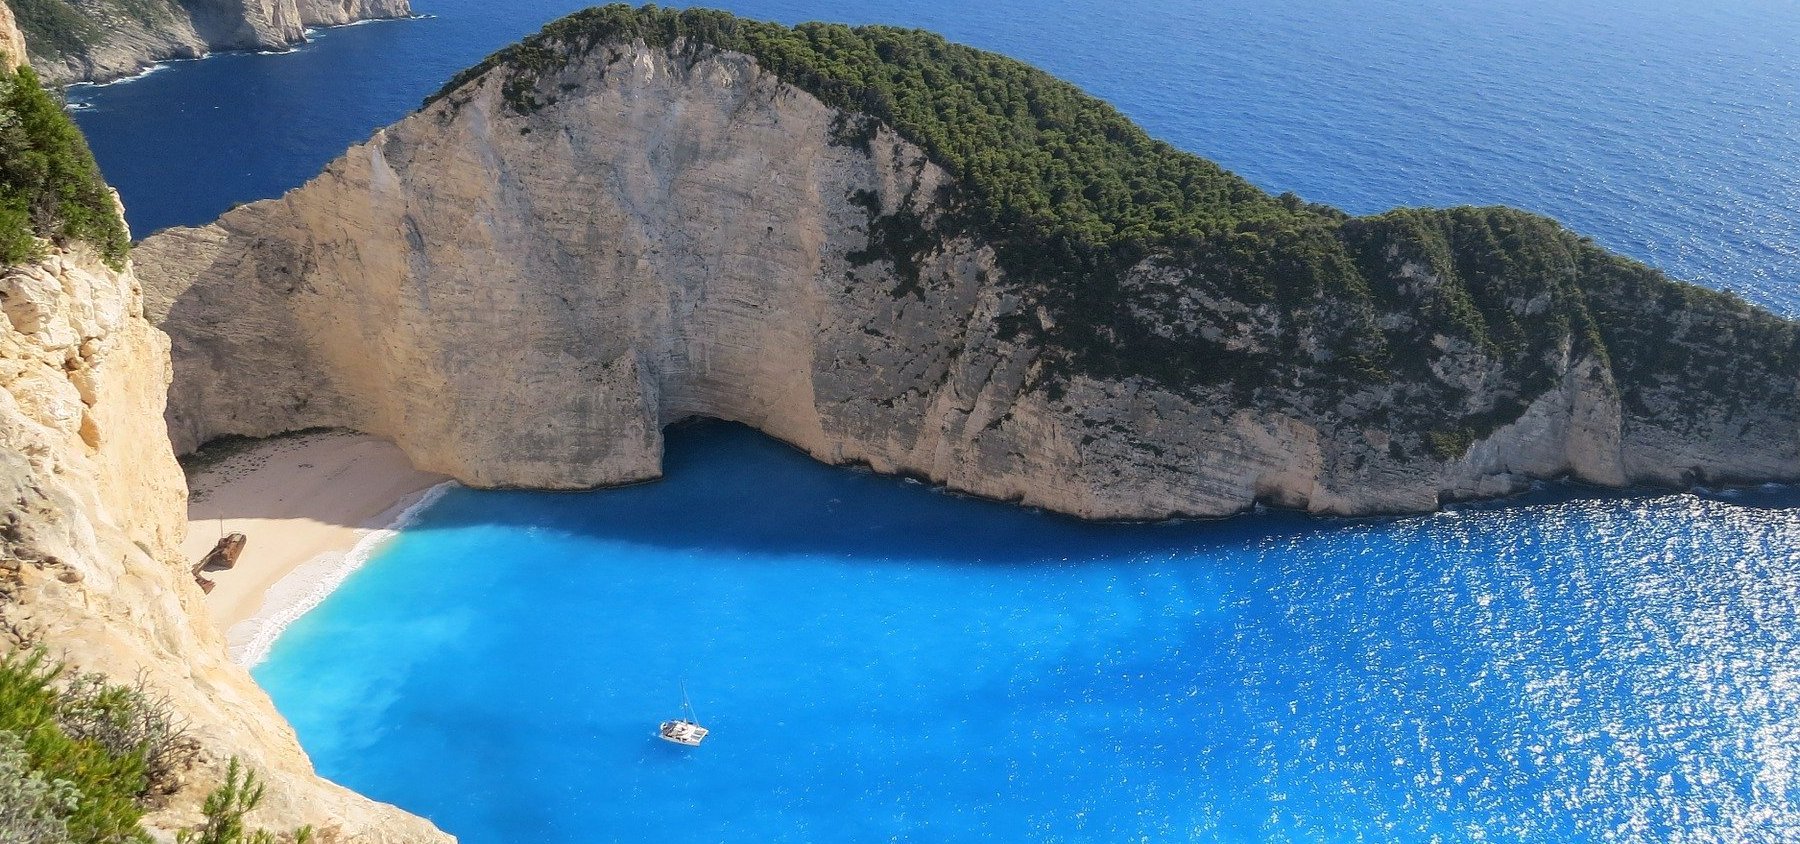 Zakynthos - Zante - shipwreck - Atlantis Travel Agency - Tours in Greece - Greek travel packages